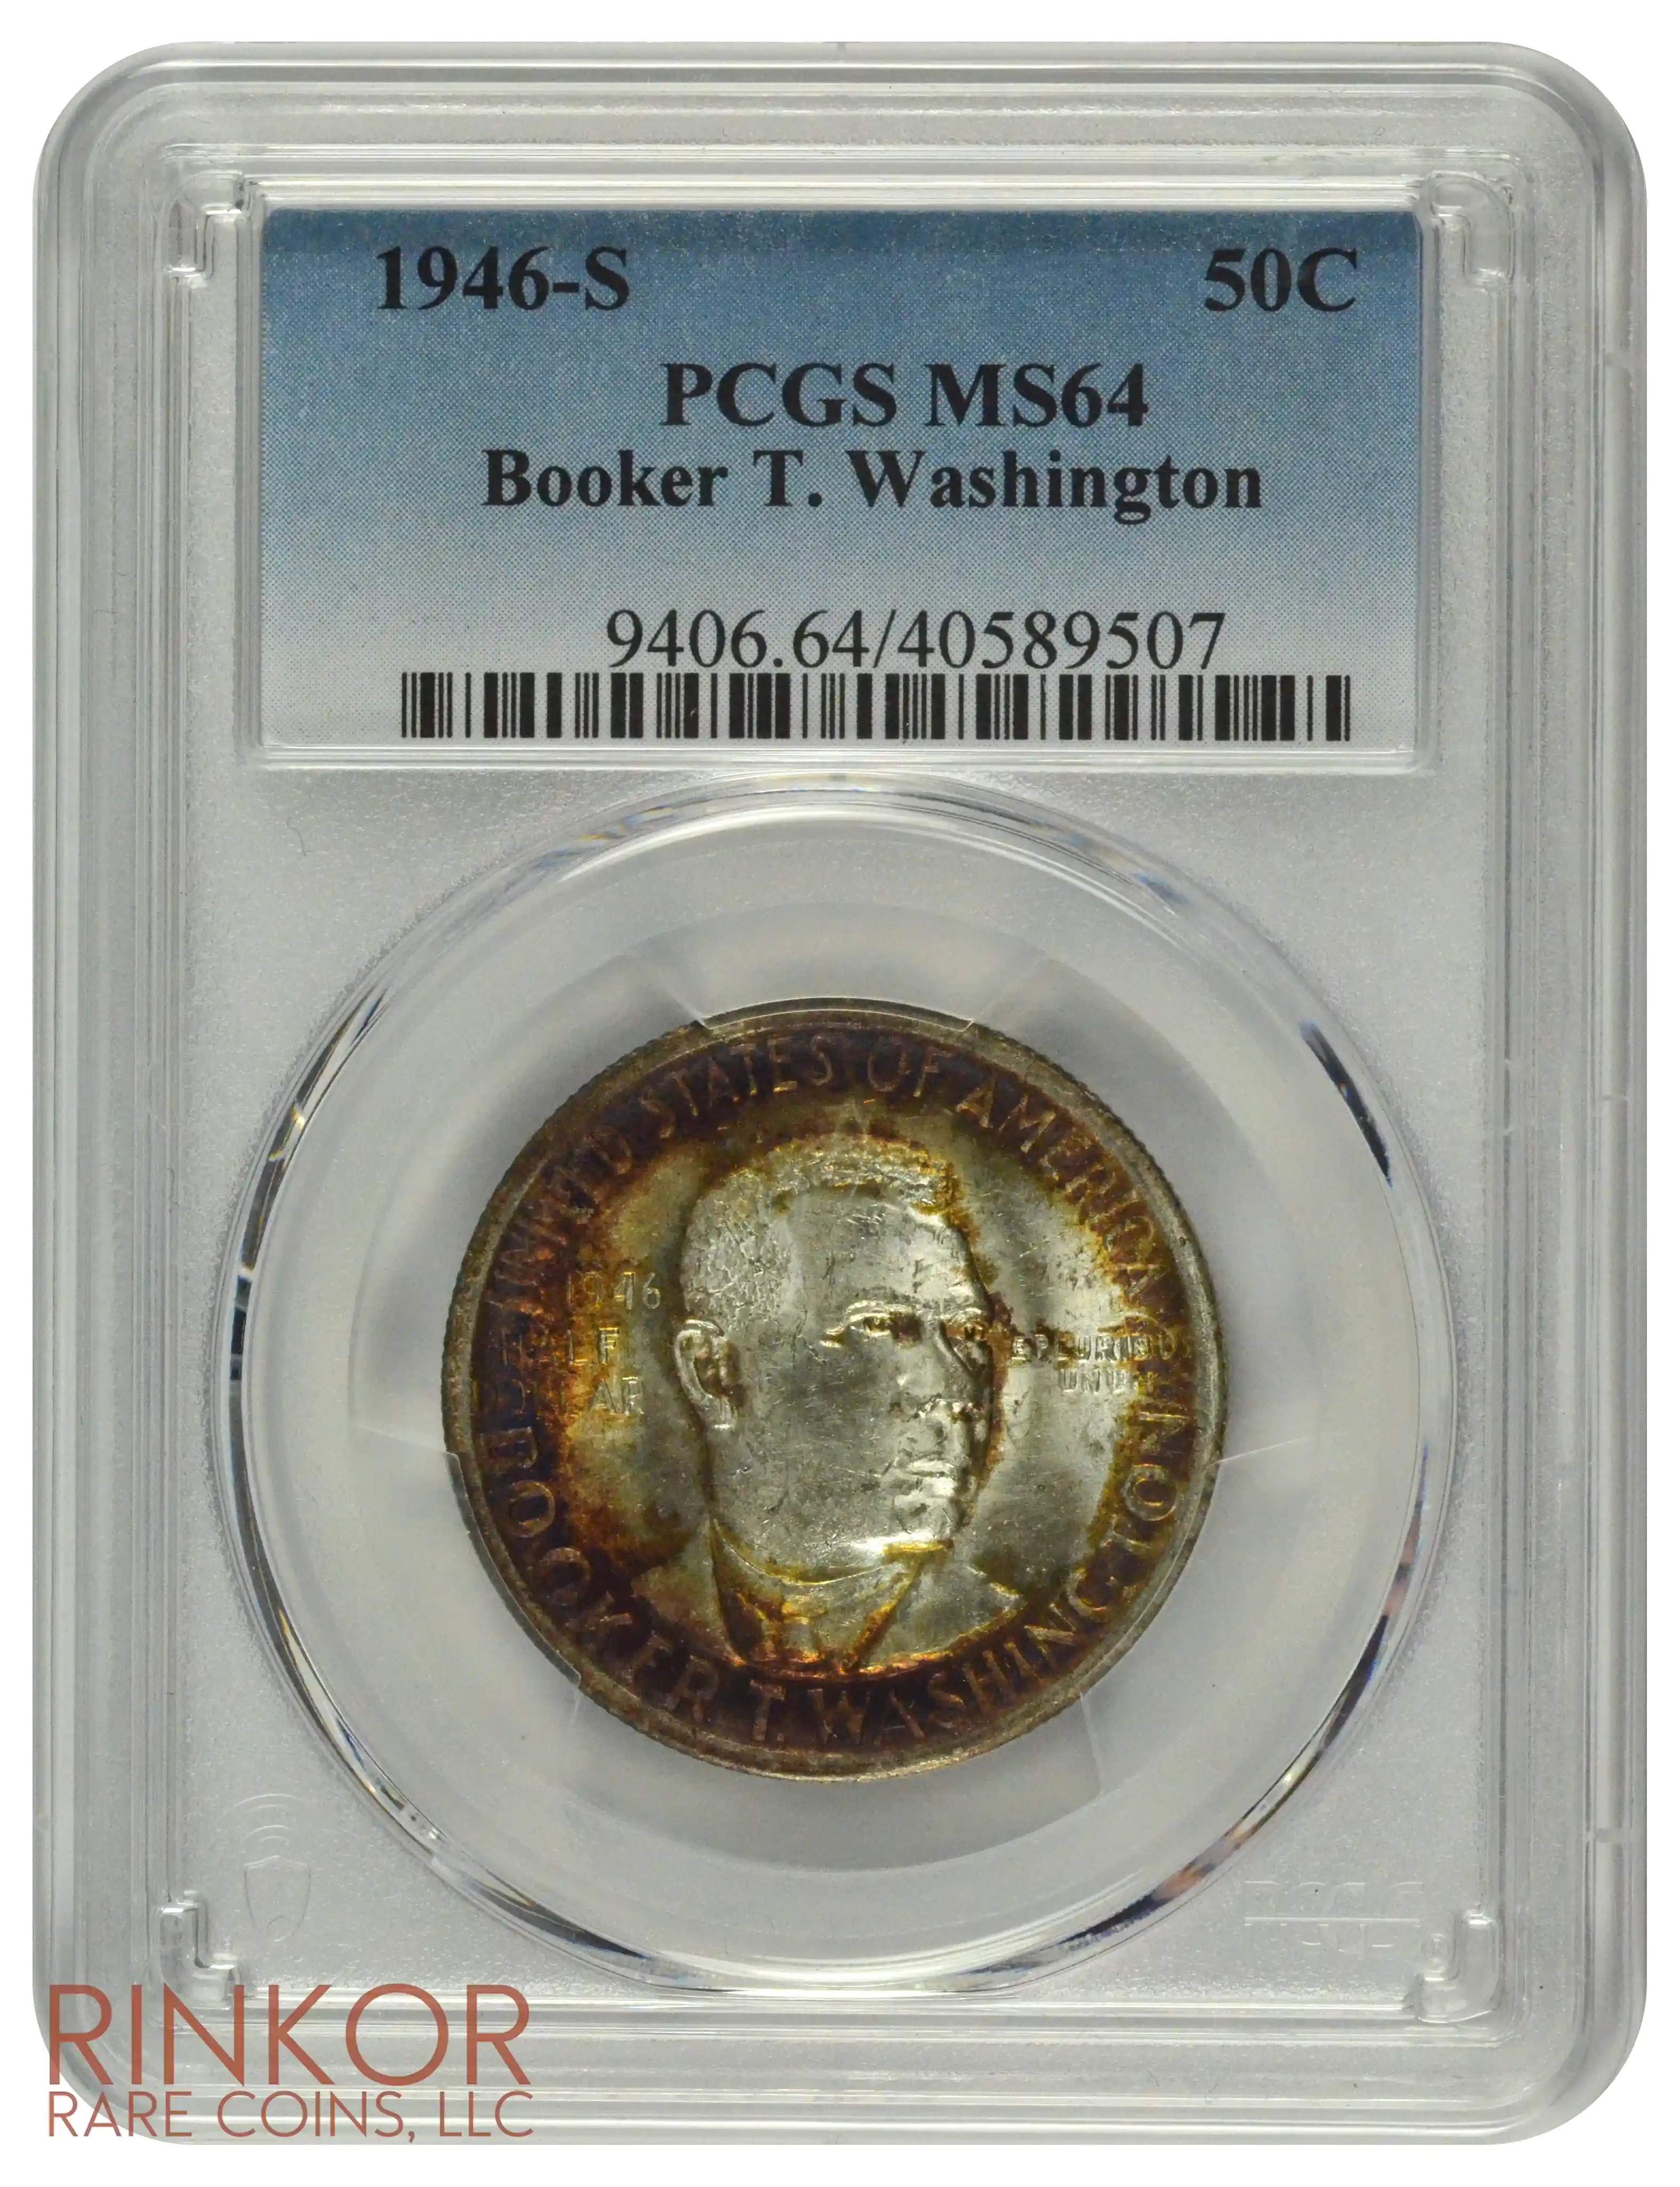 1946-S Booker T. Washington Commemorative Half Dollar PCGS MS 64